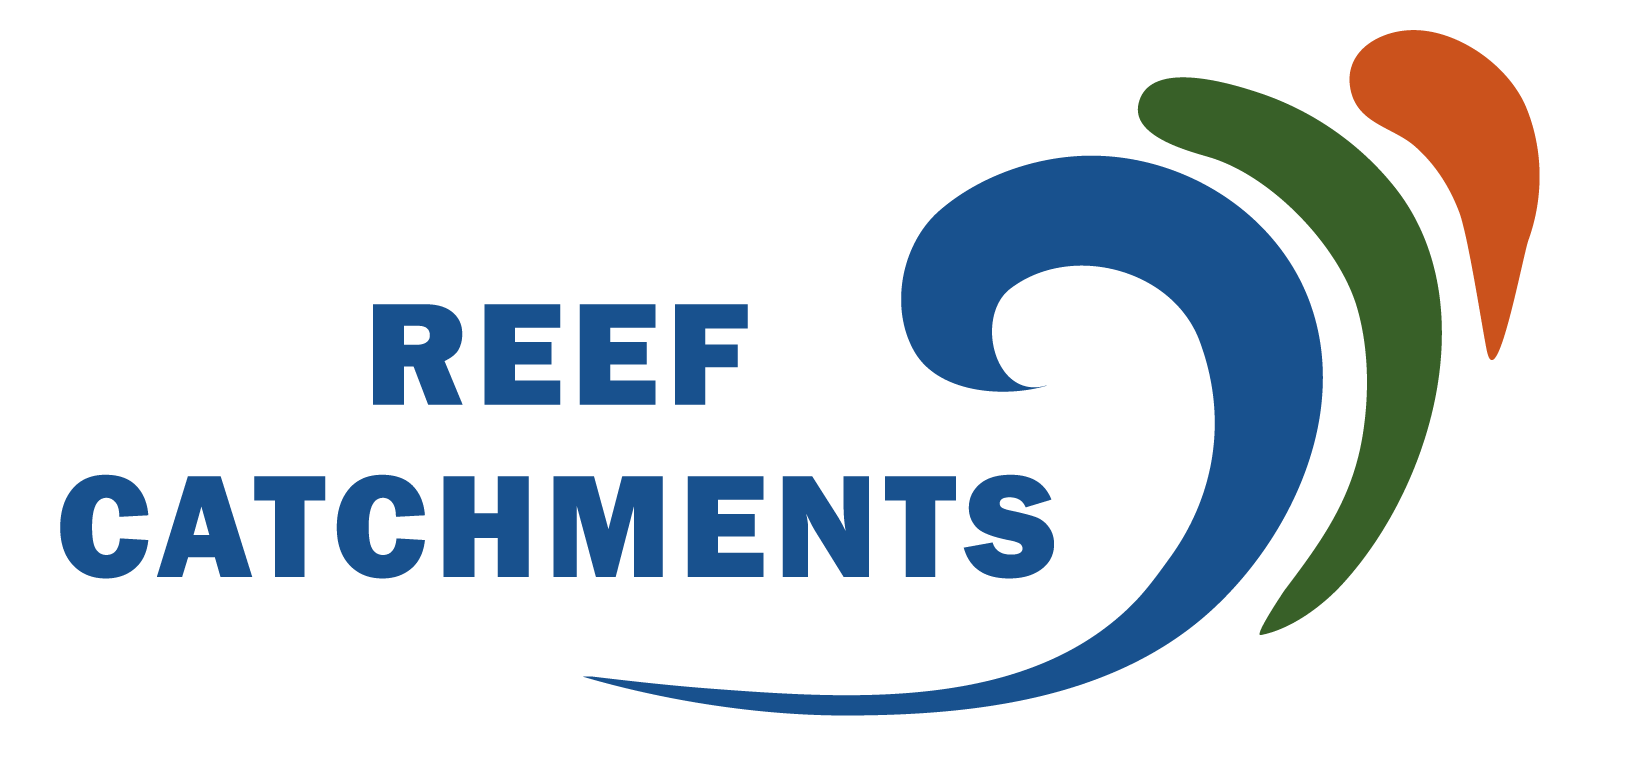 Reef Catchments logo